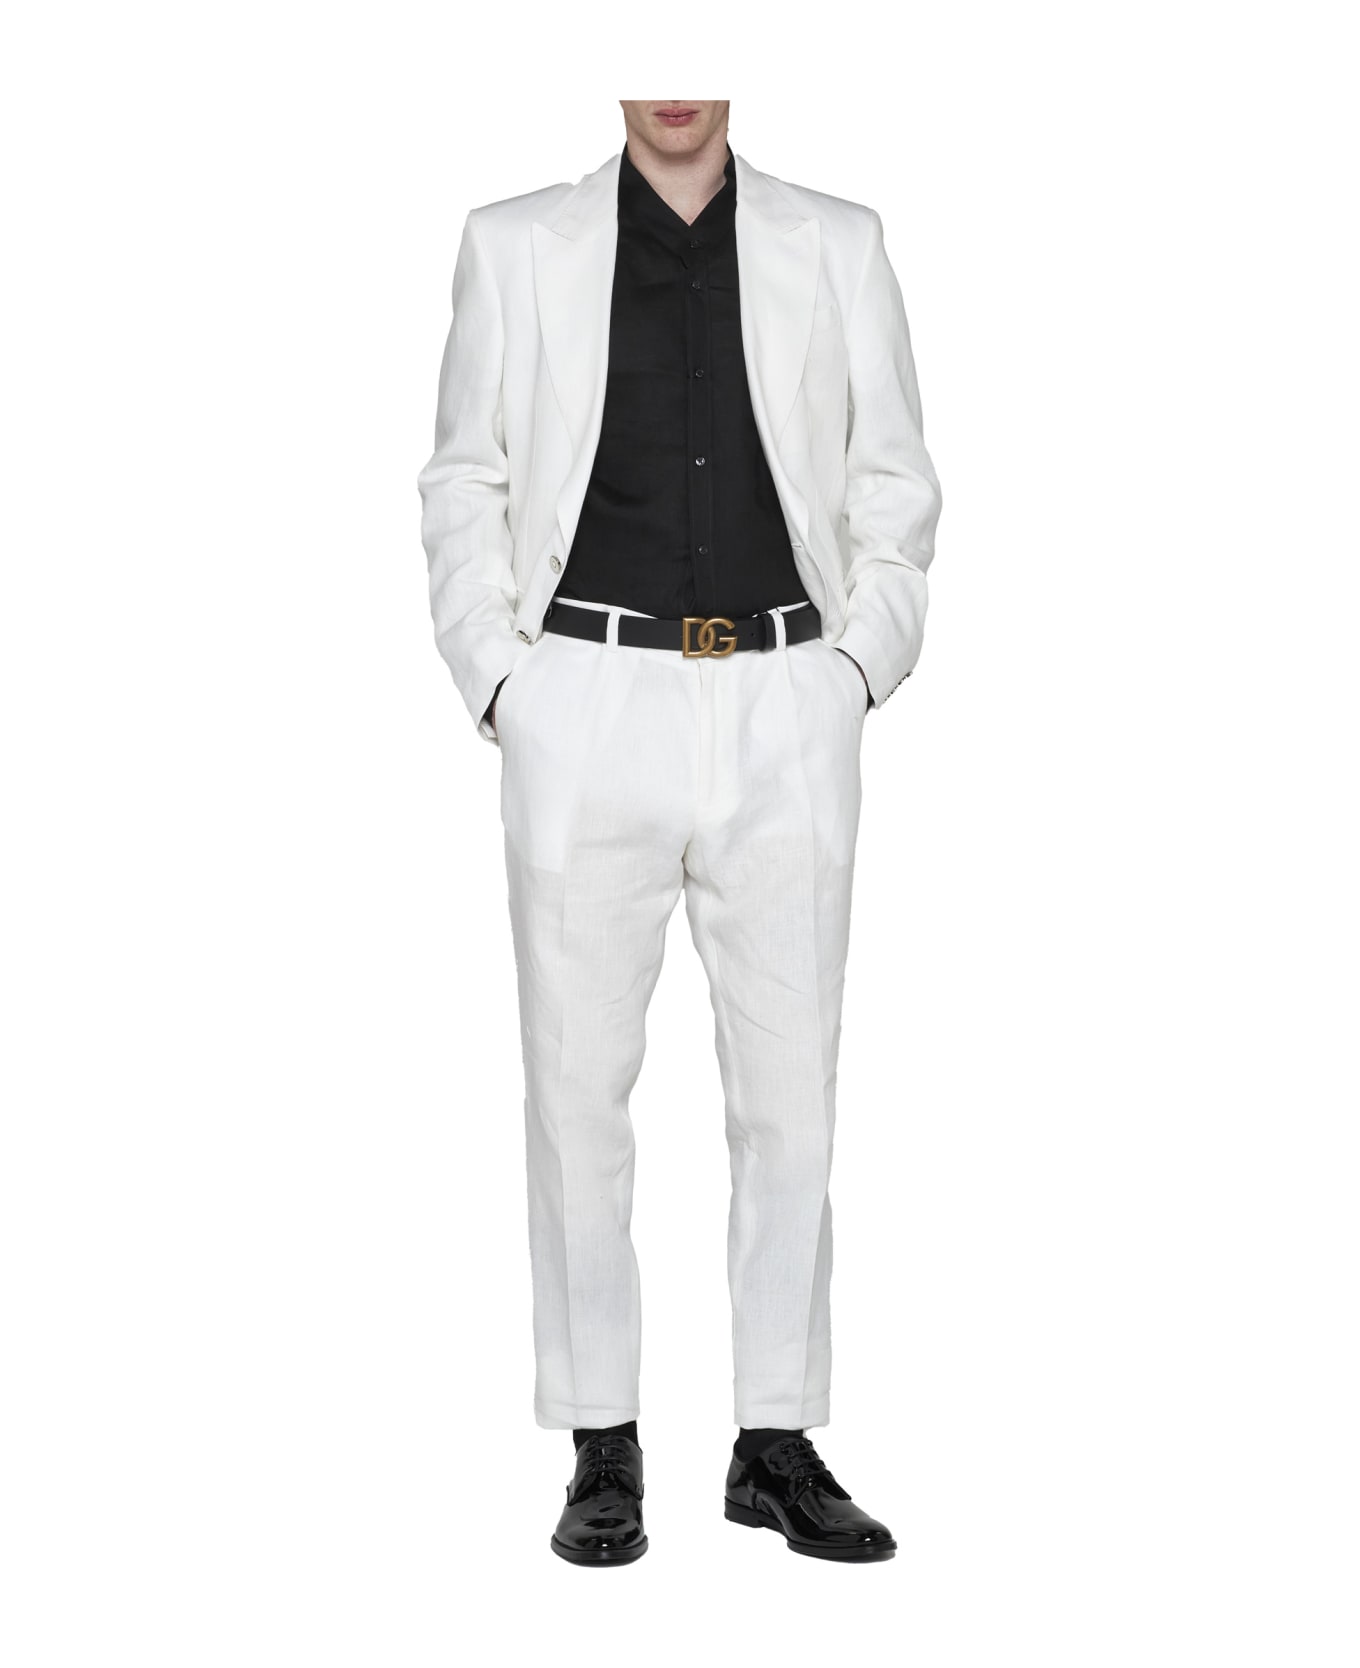 Dolce & Gabbana Pants - Bianco ボトムス